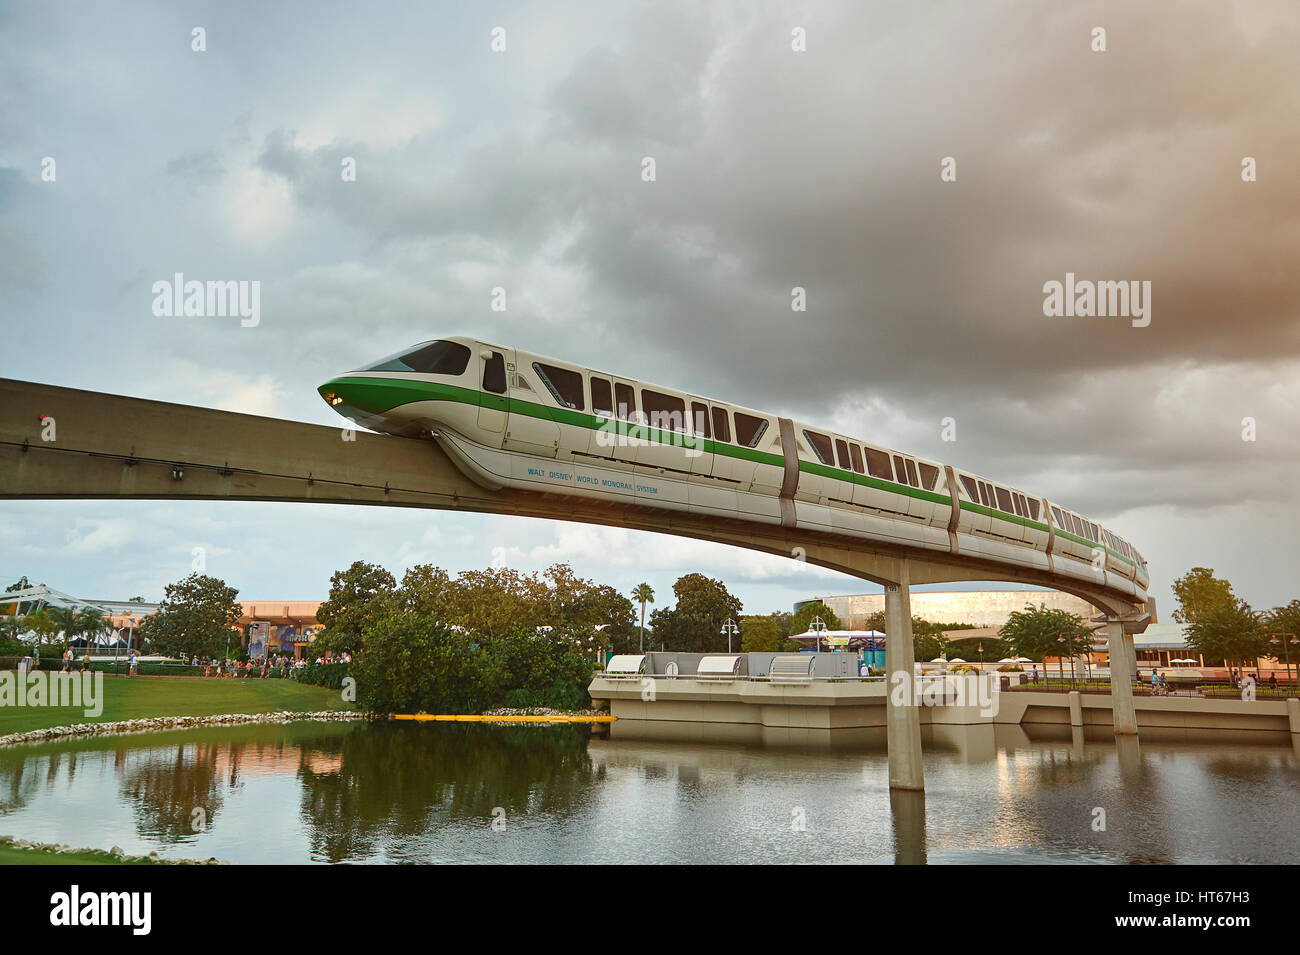 Orlando, USA - August 30, 2012: Monorail train in epcot disney park. Future transportation in Disney resort park Epcot Stock Photo